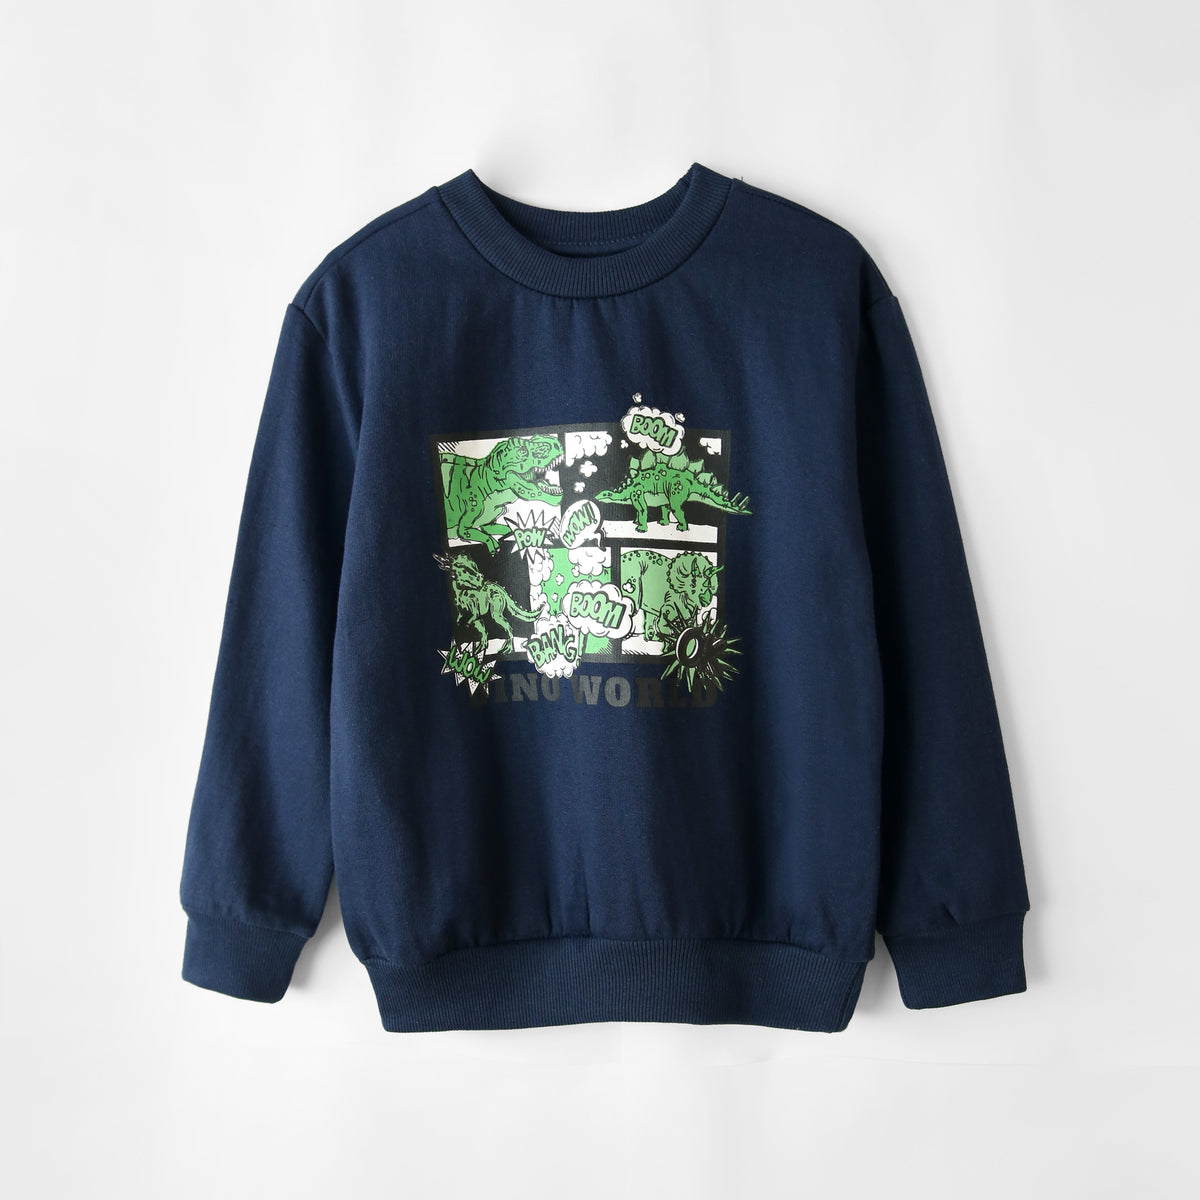 Premium Quality Graphic Fleece Sweatshirt For Kids